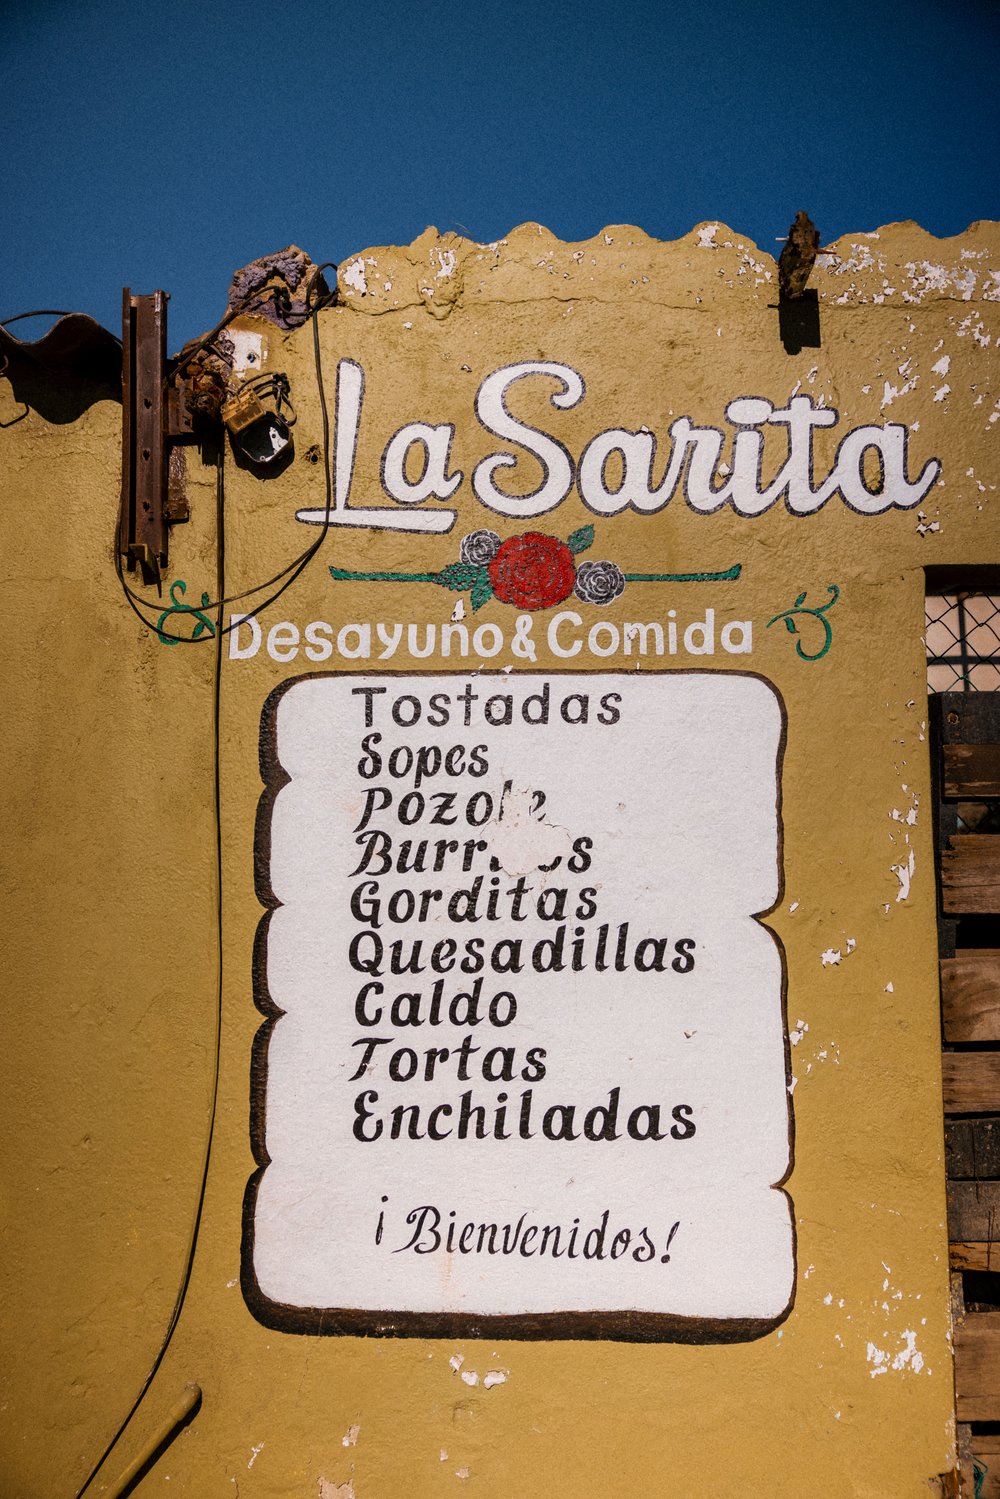 Local Restaurant Todos Santos